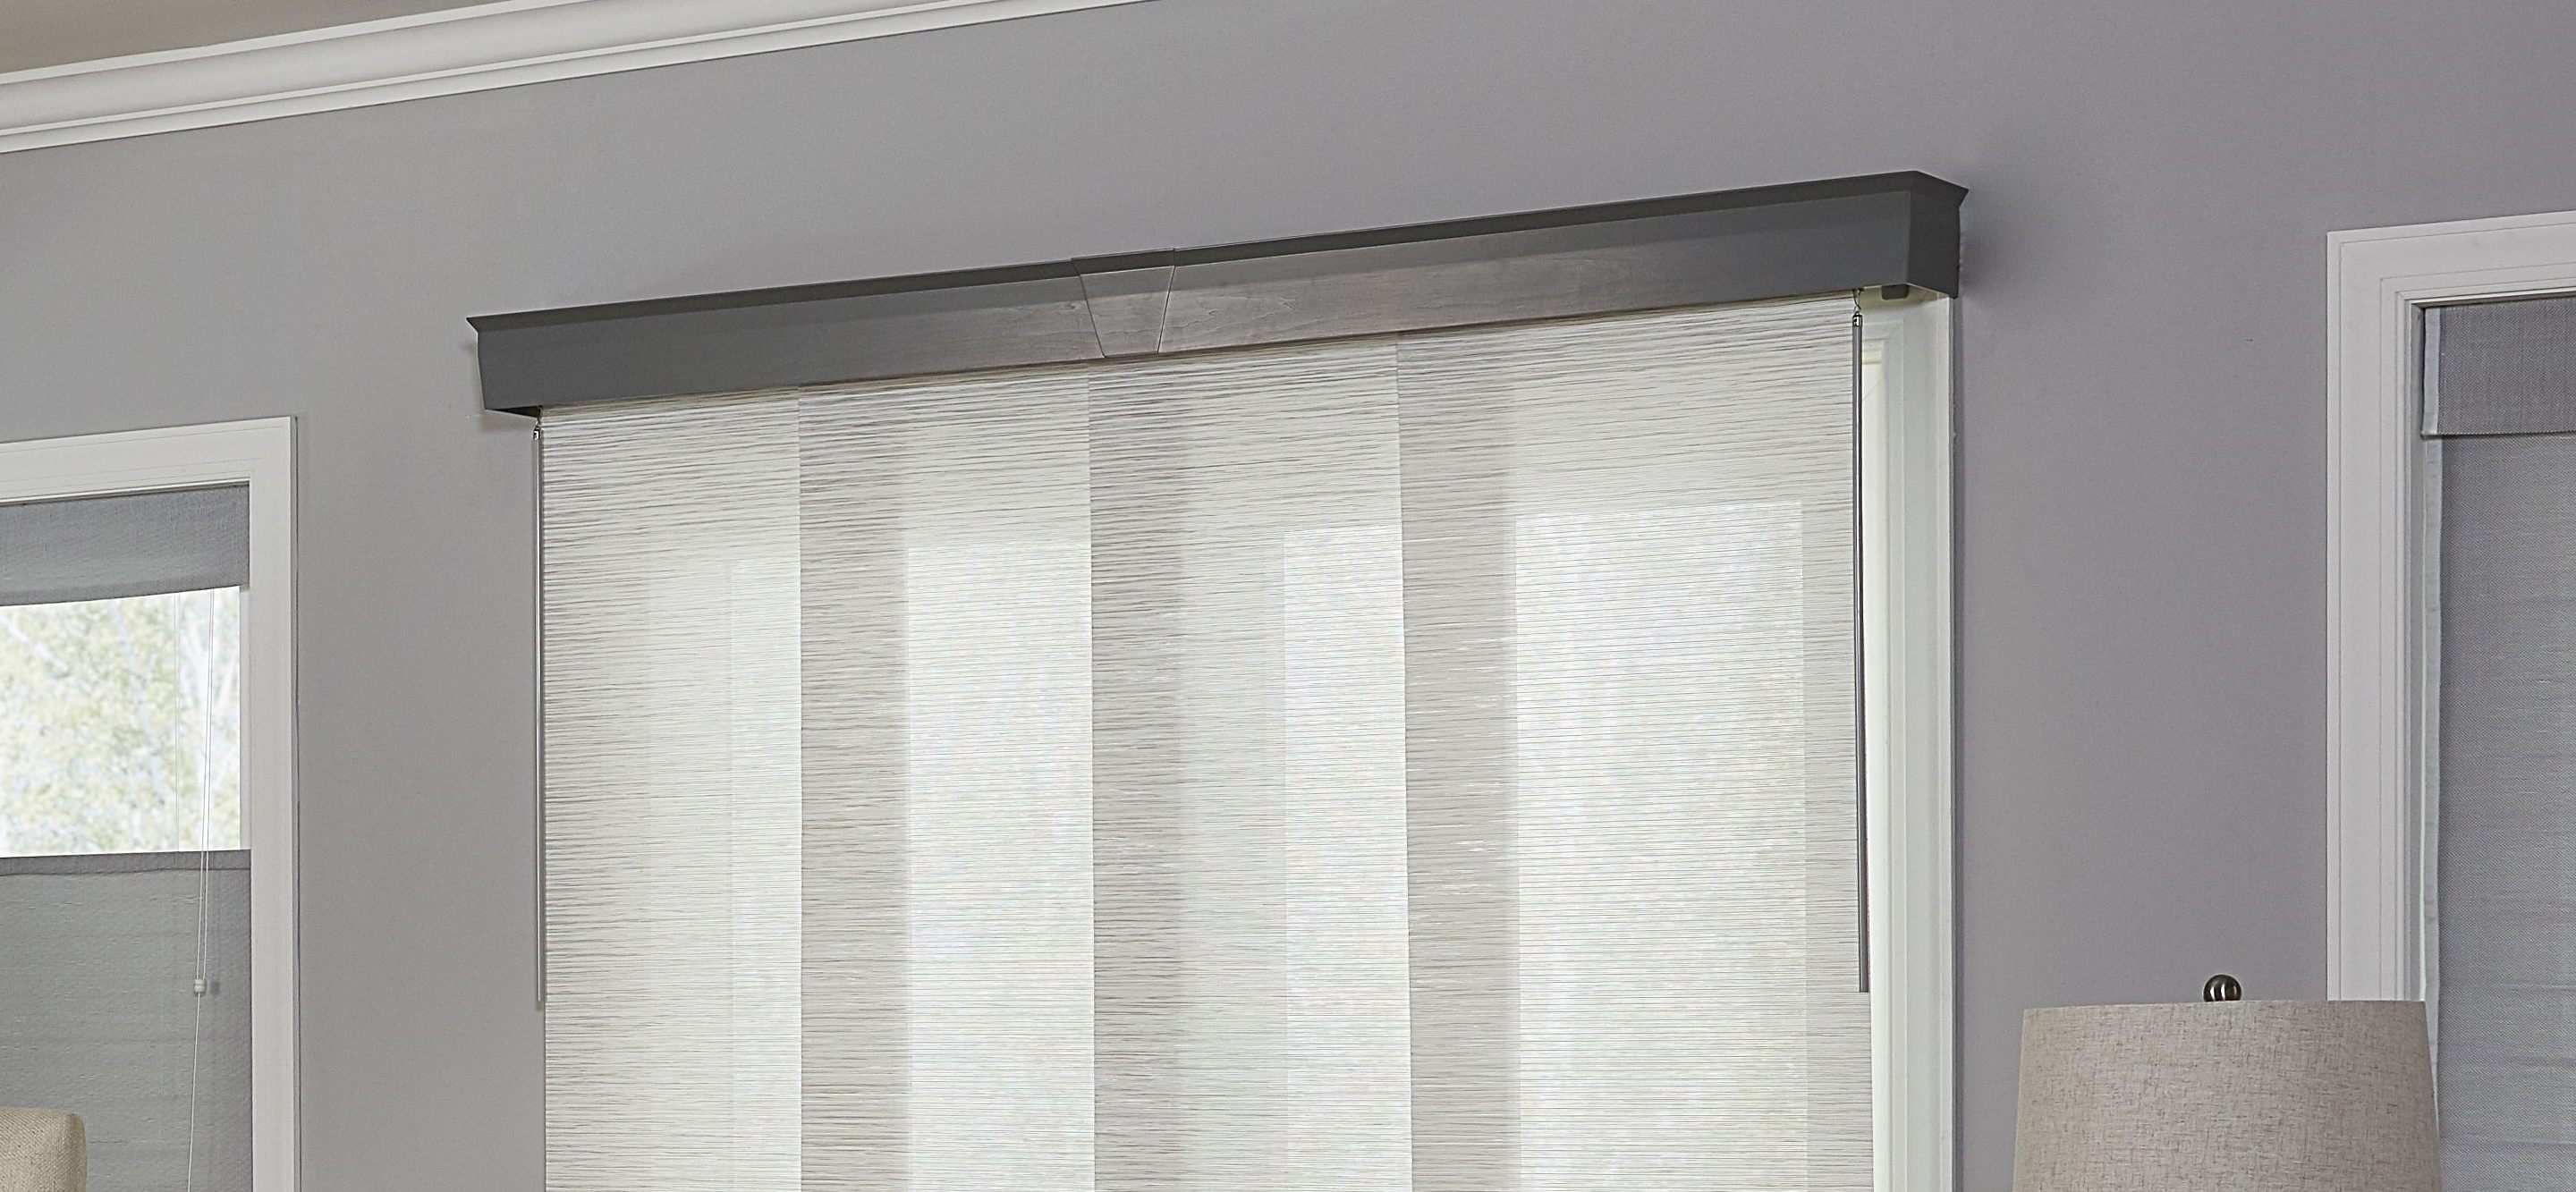 The Best Vertical Blinds Alternatives For Sliding Glass Doors in sizing 2880 X 1333